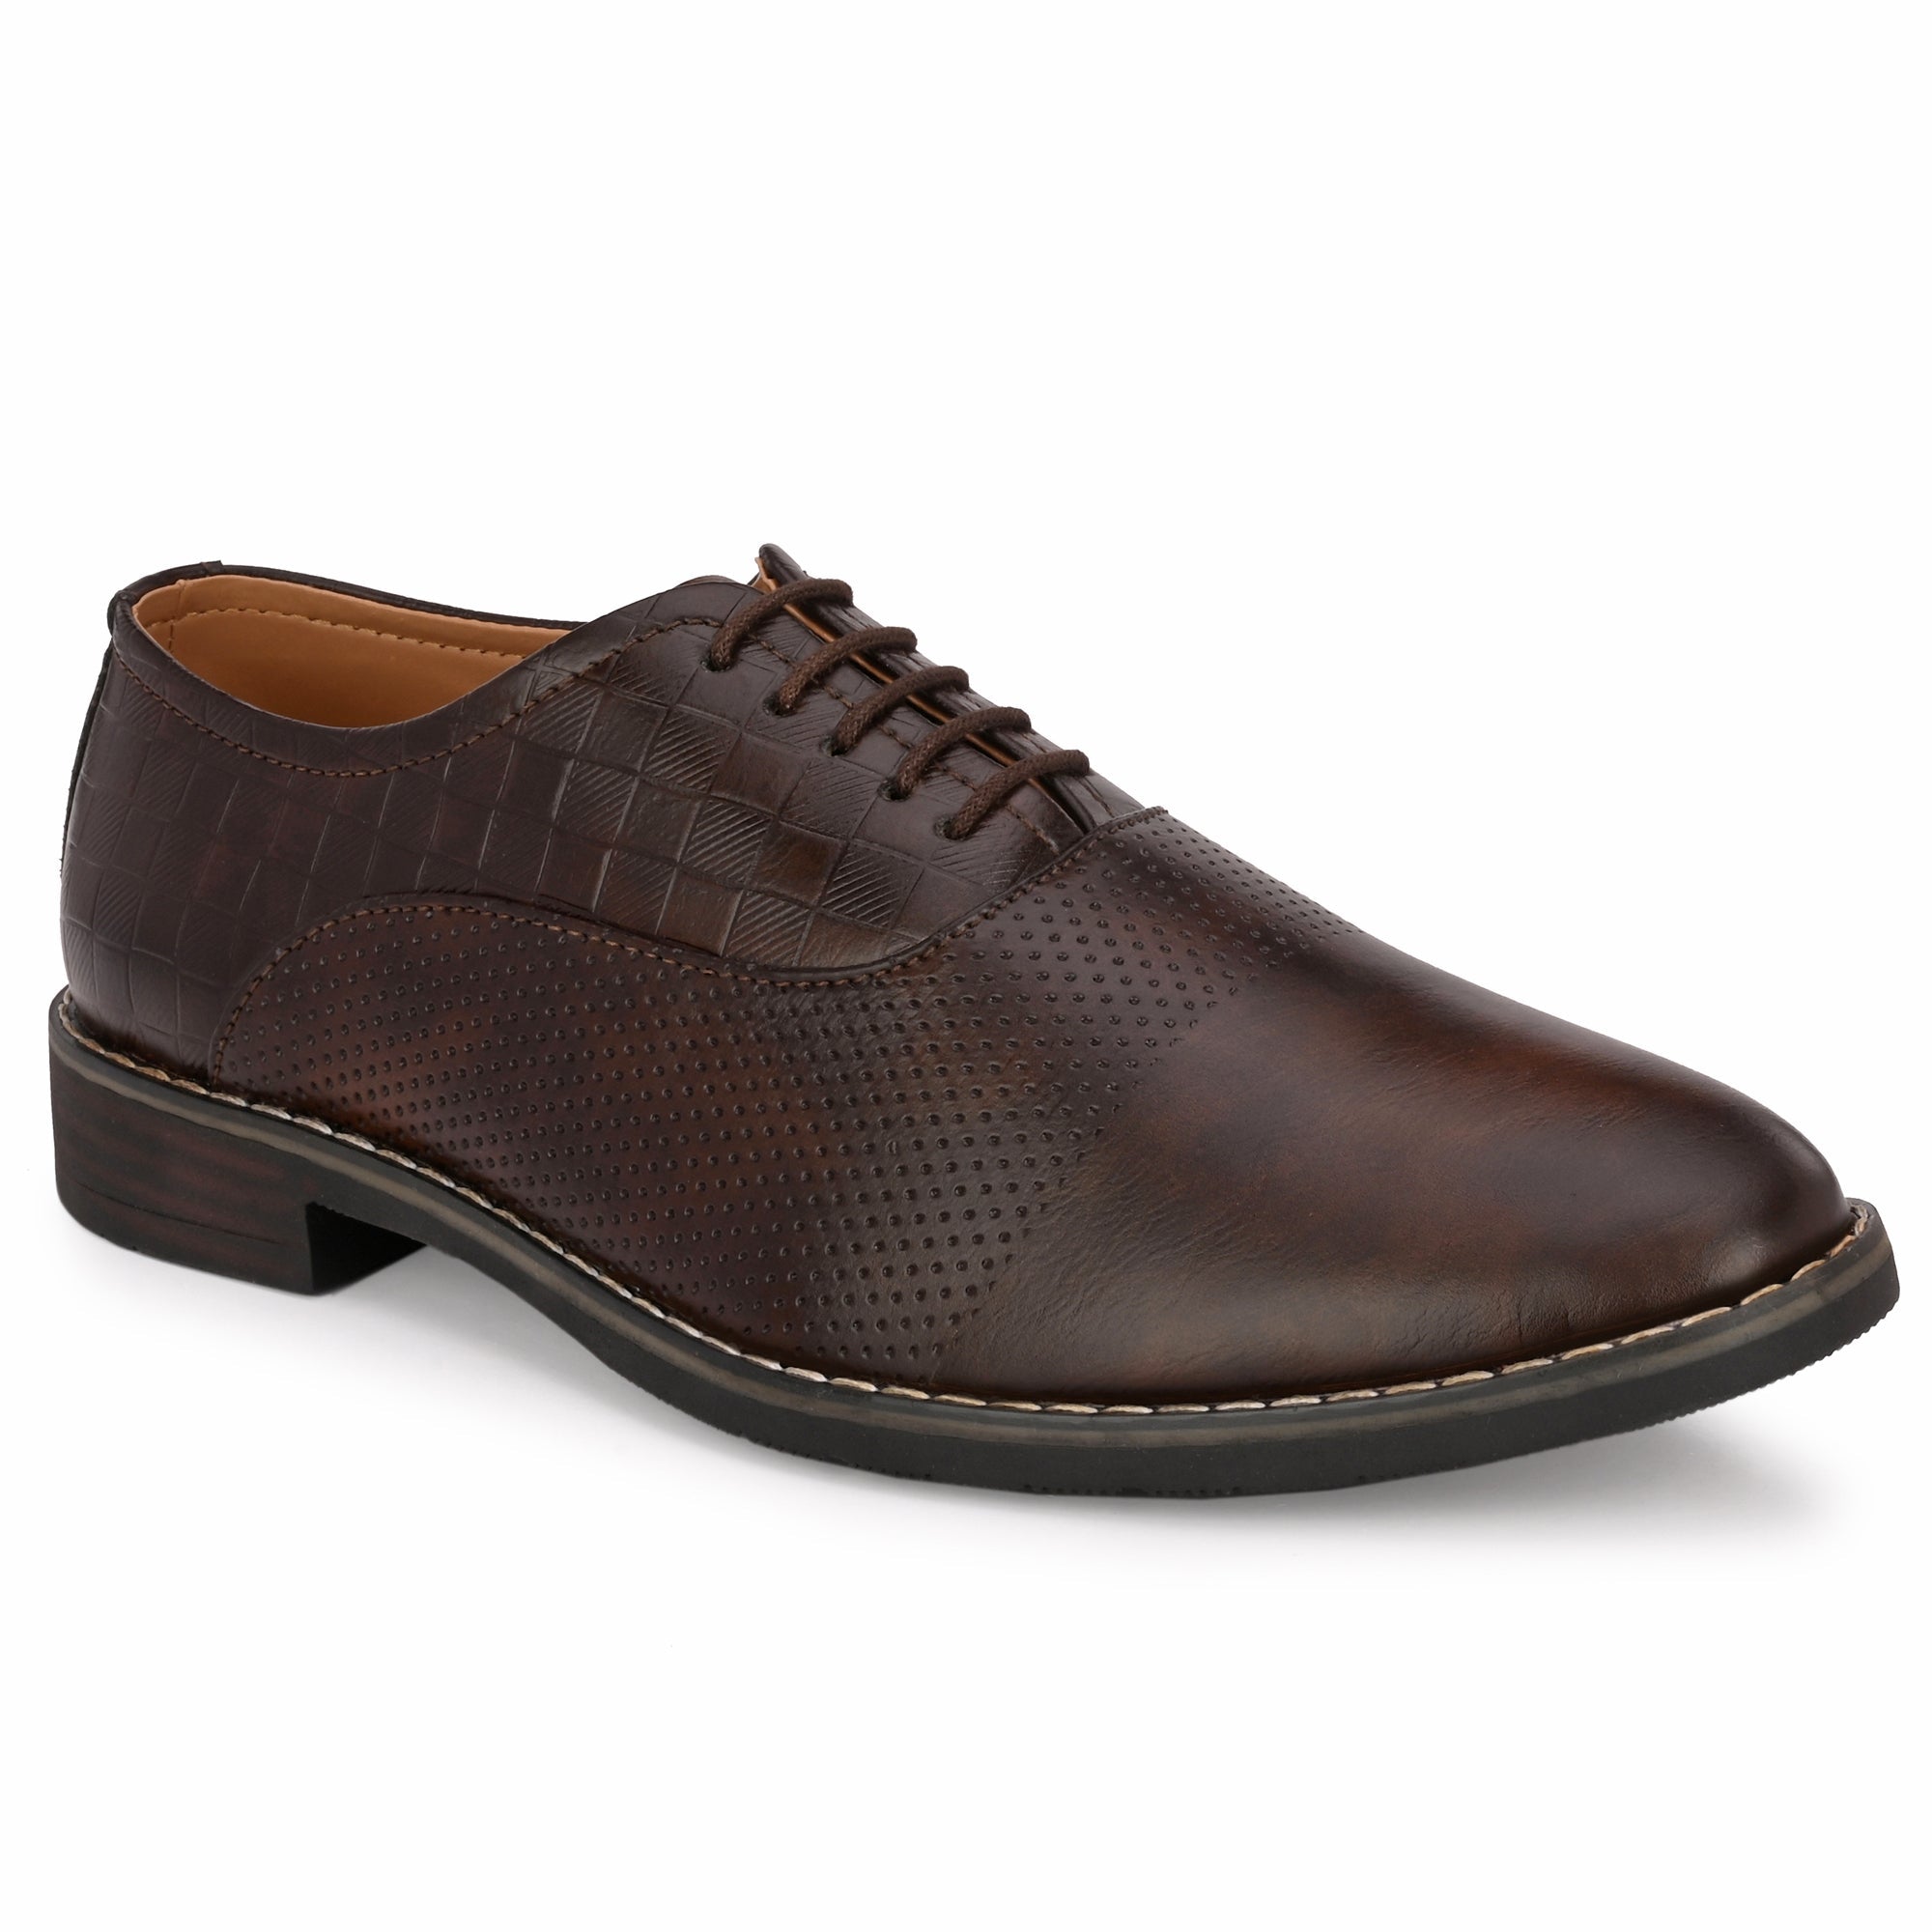 brown-formal-lace-up-attitudist-shoes-for-men-with-design-sp11b